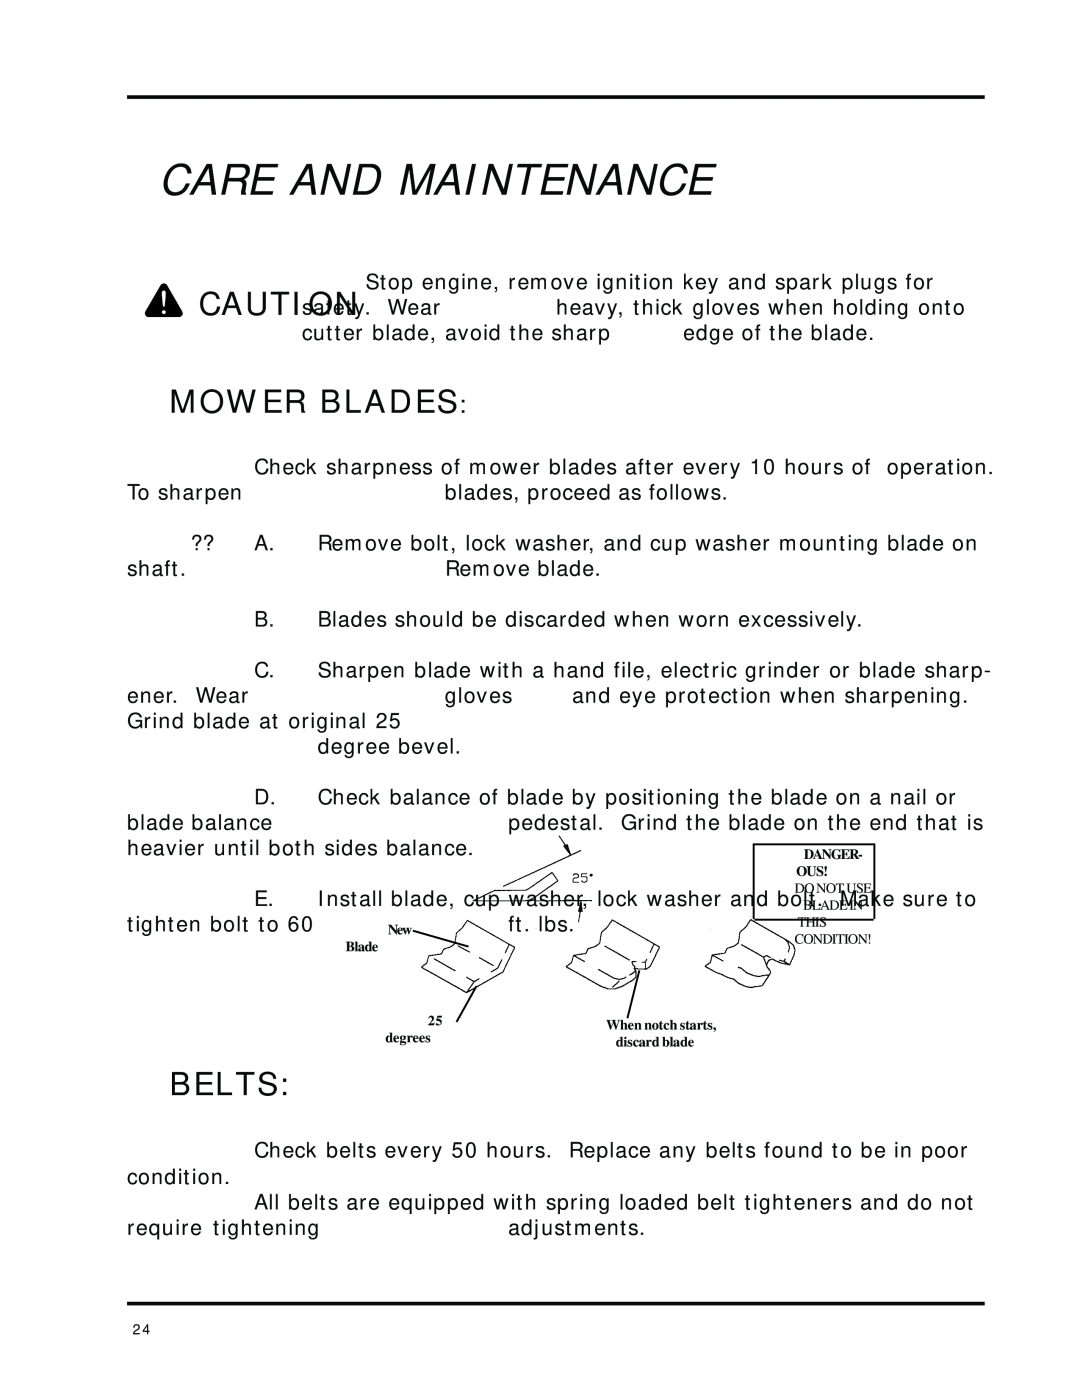 Dixon ZTR 8025 manual Mower Blades, Belts, Care And Maintenance, blade balance, heavier until both sides balance, ft. lbs 